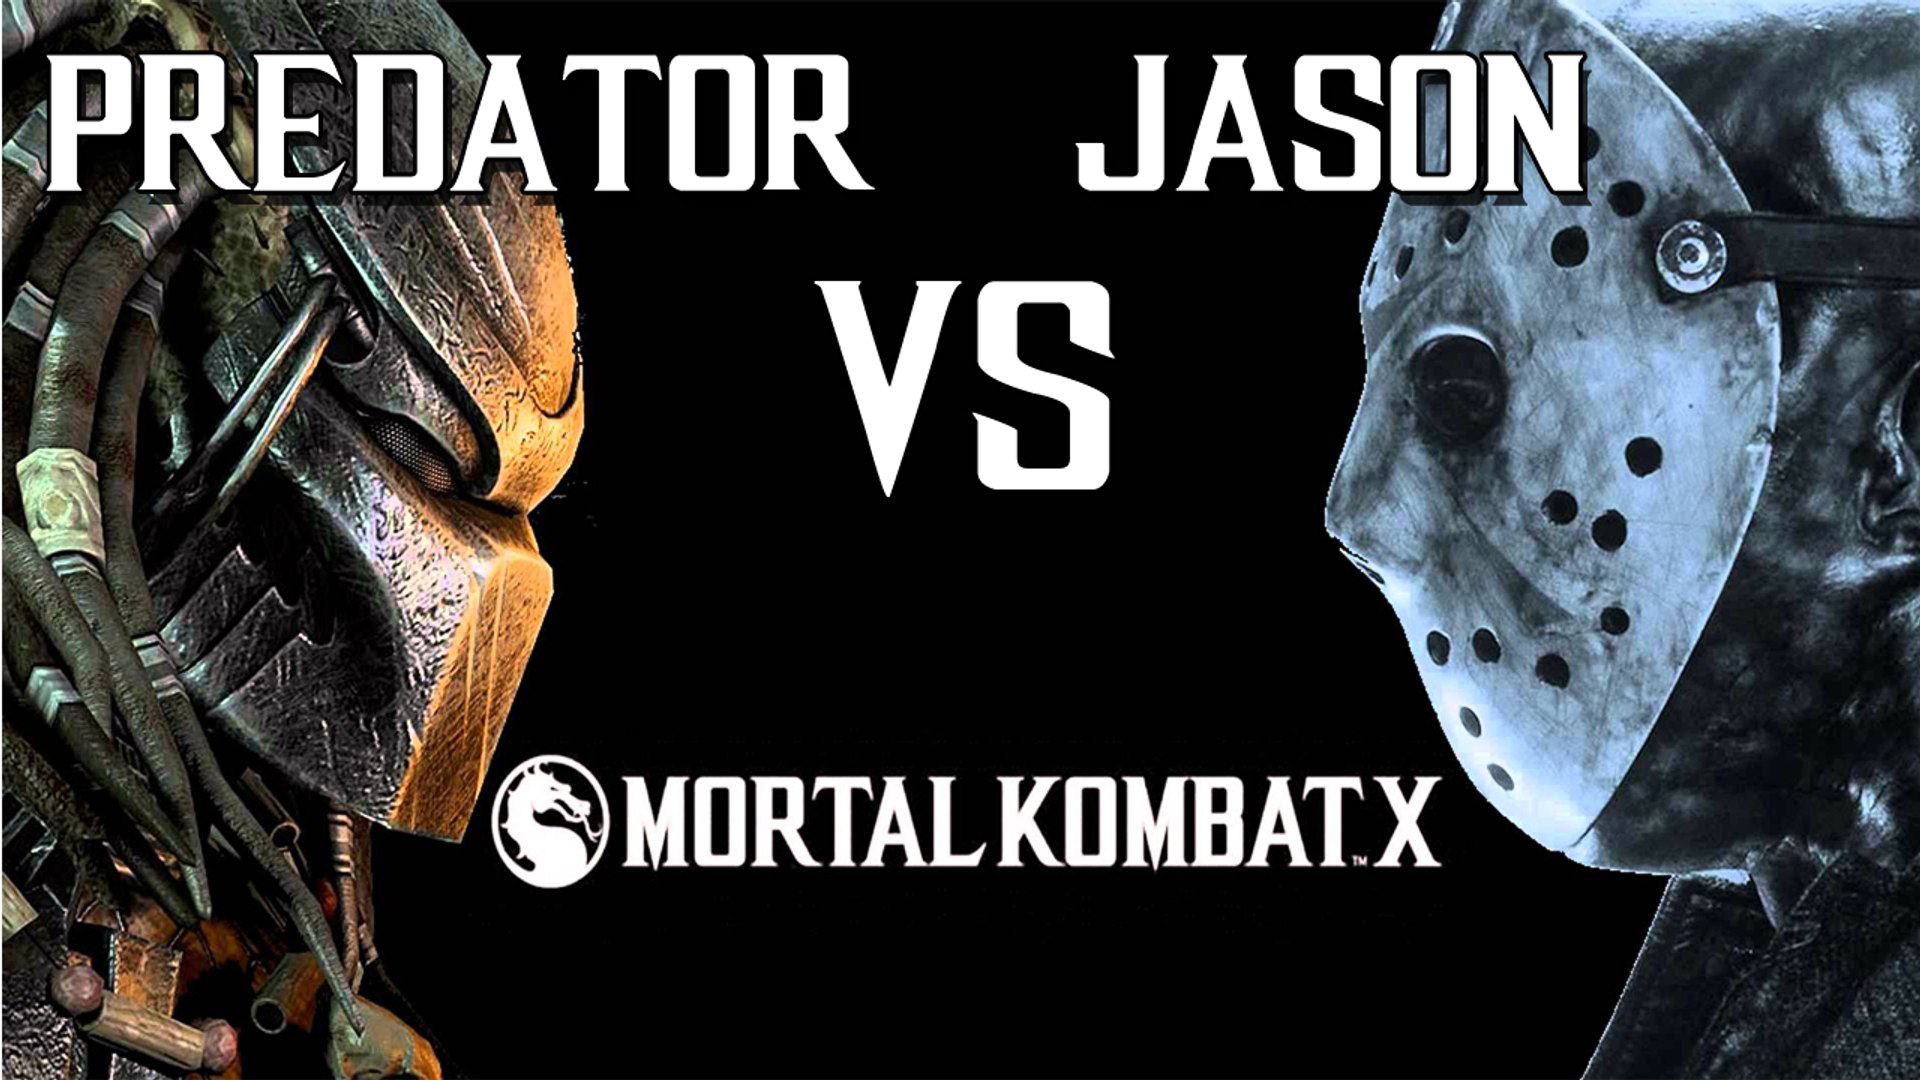 Mortal Kombat Unchained [PSP] - Scorpion's Fatalities - video Dailymotion